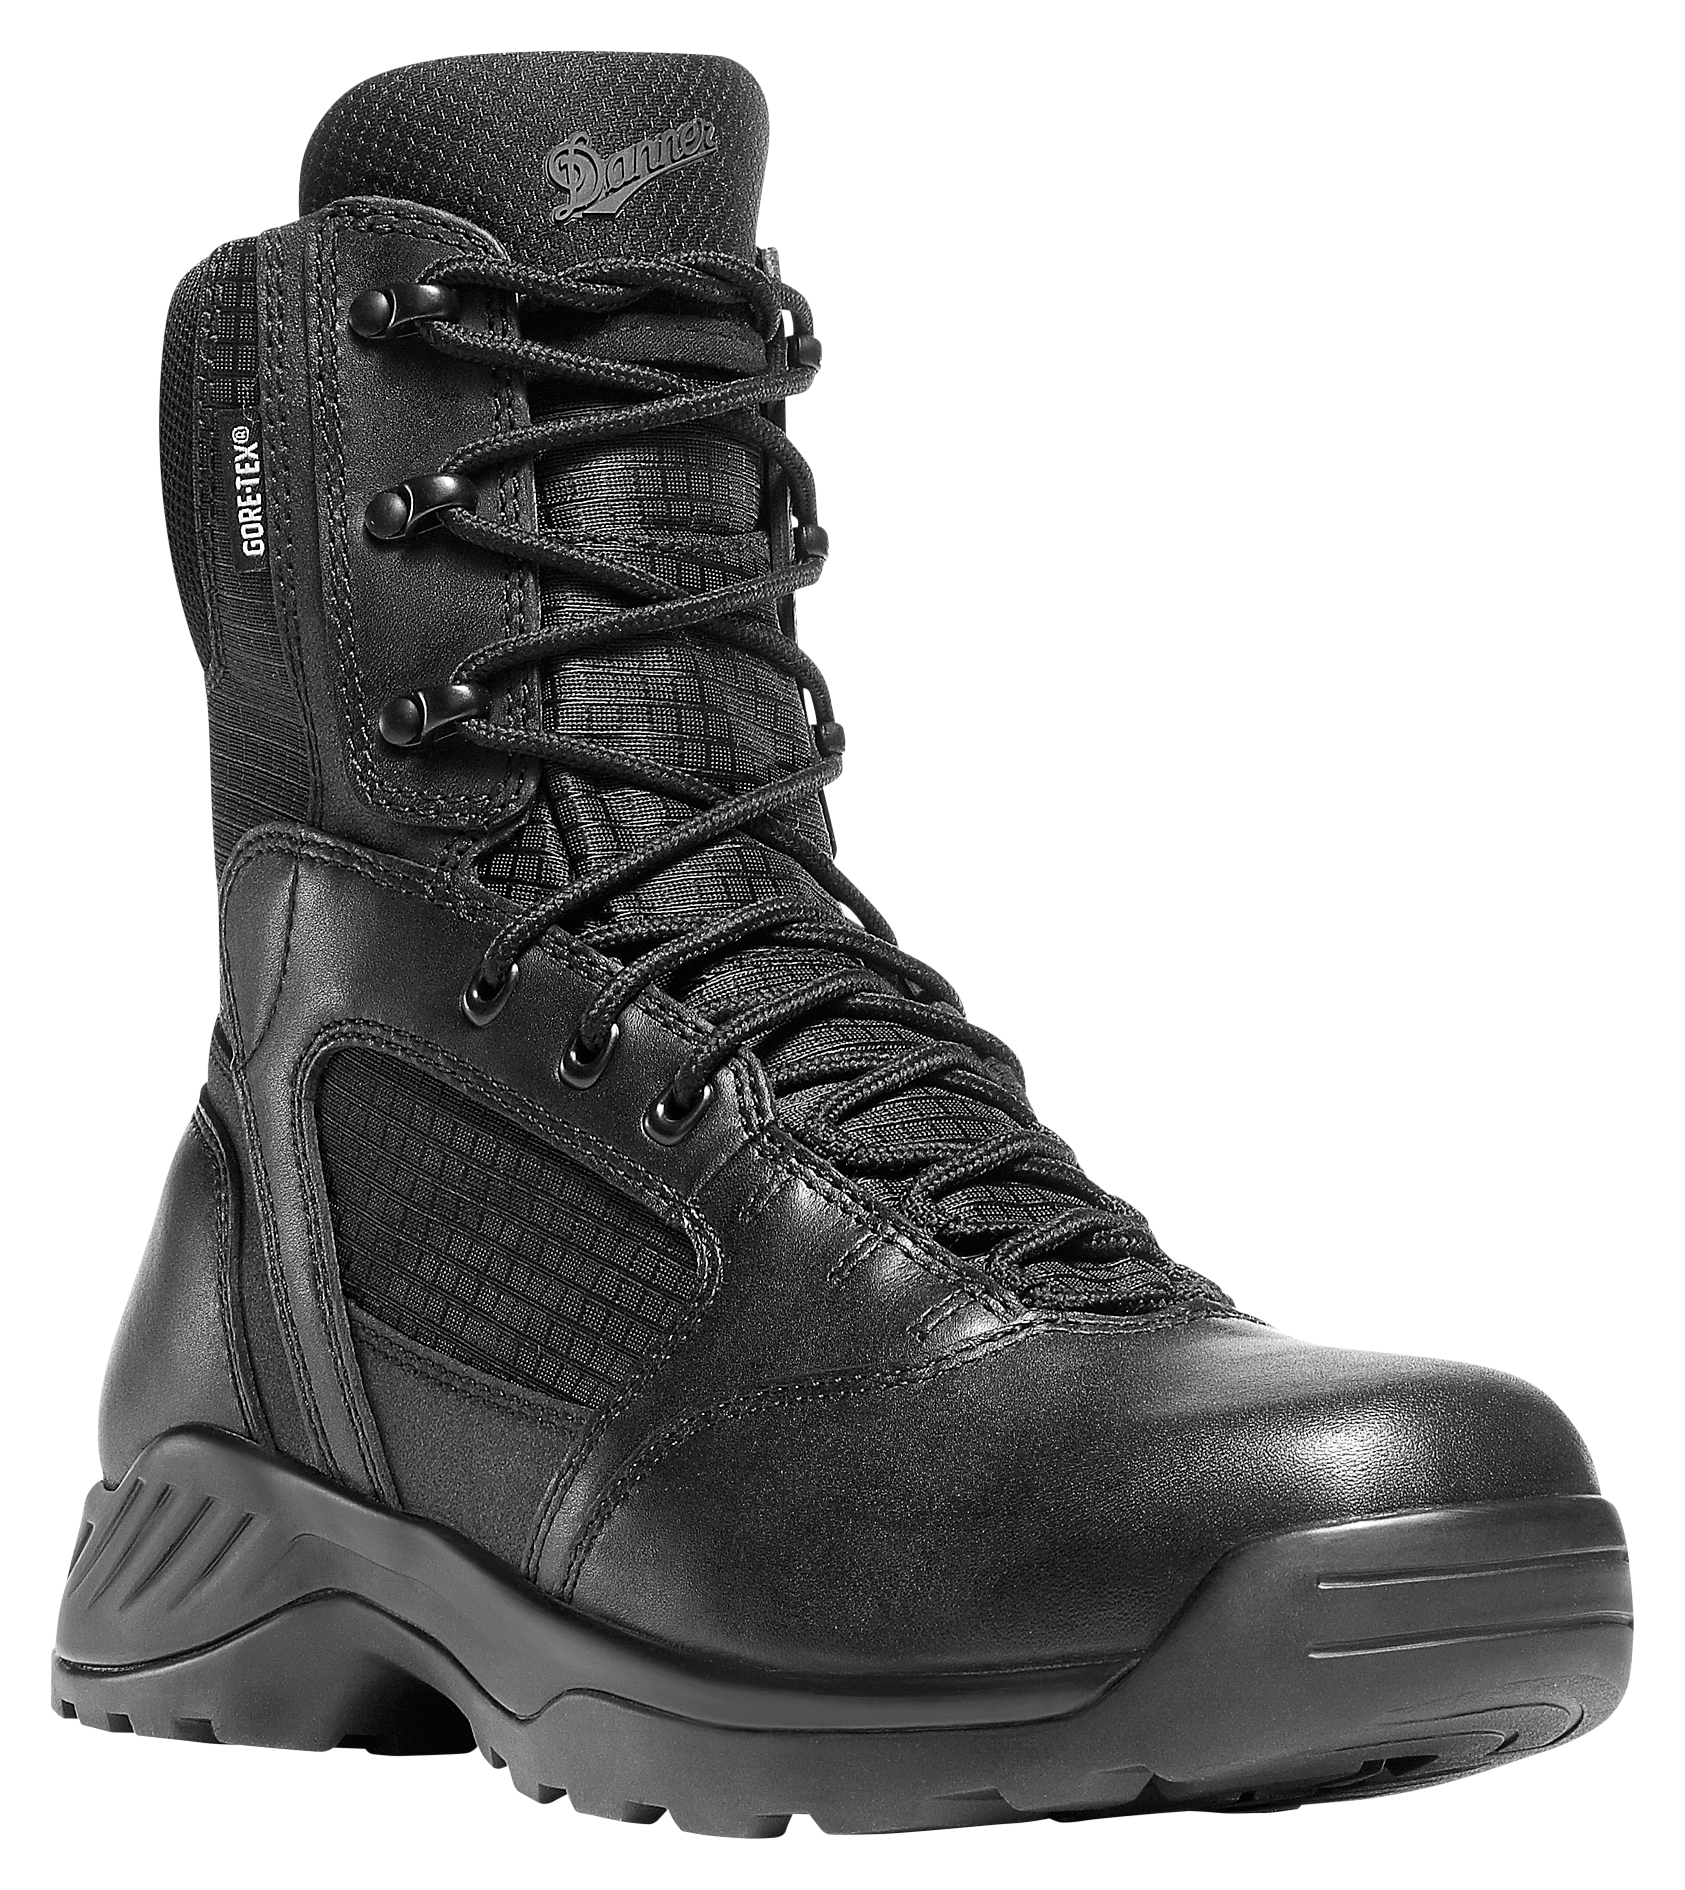 Danner Kinetic GTX Side-Zip Waterproof Tactical Duty Boots for Men - Black - 8M